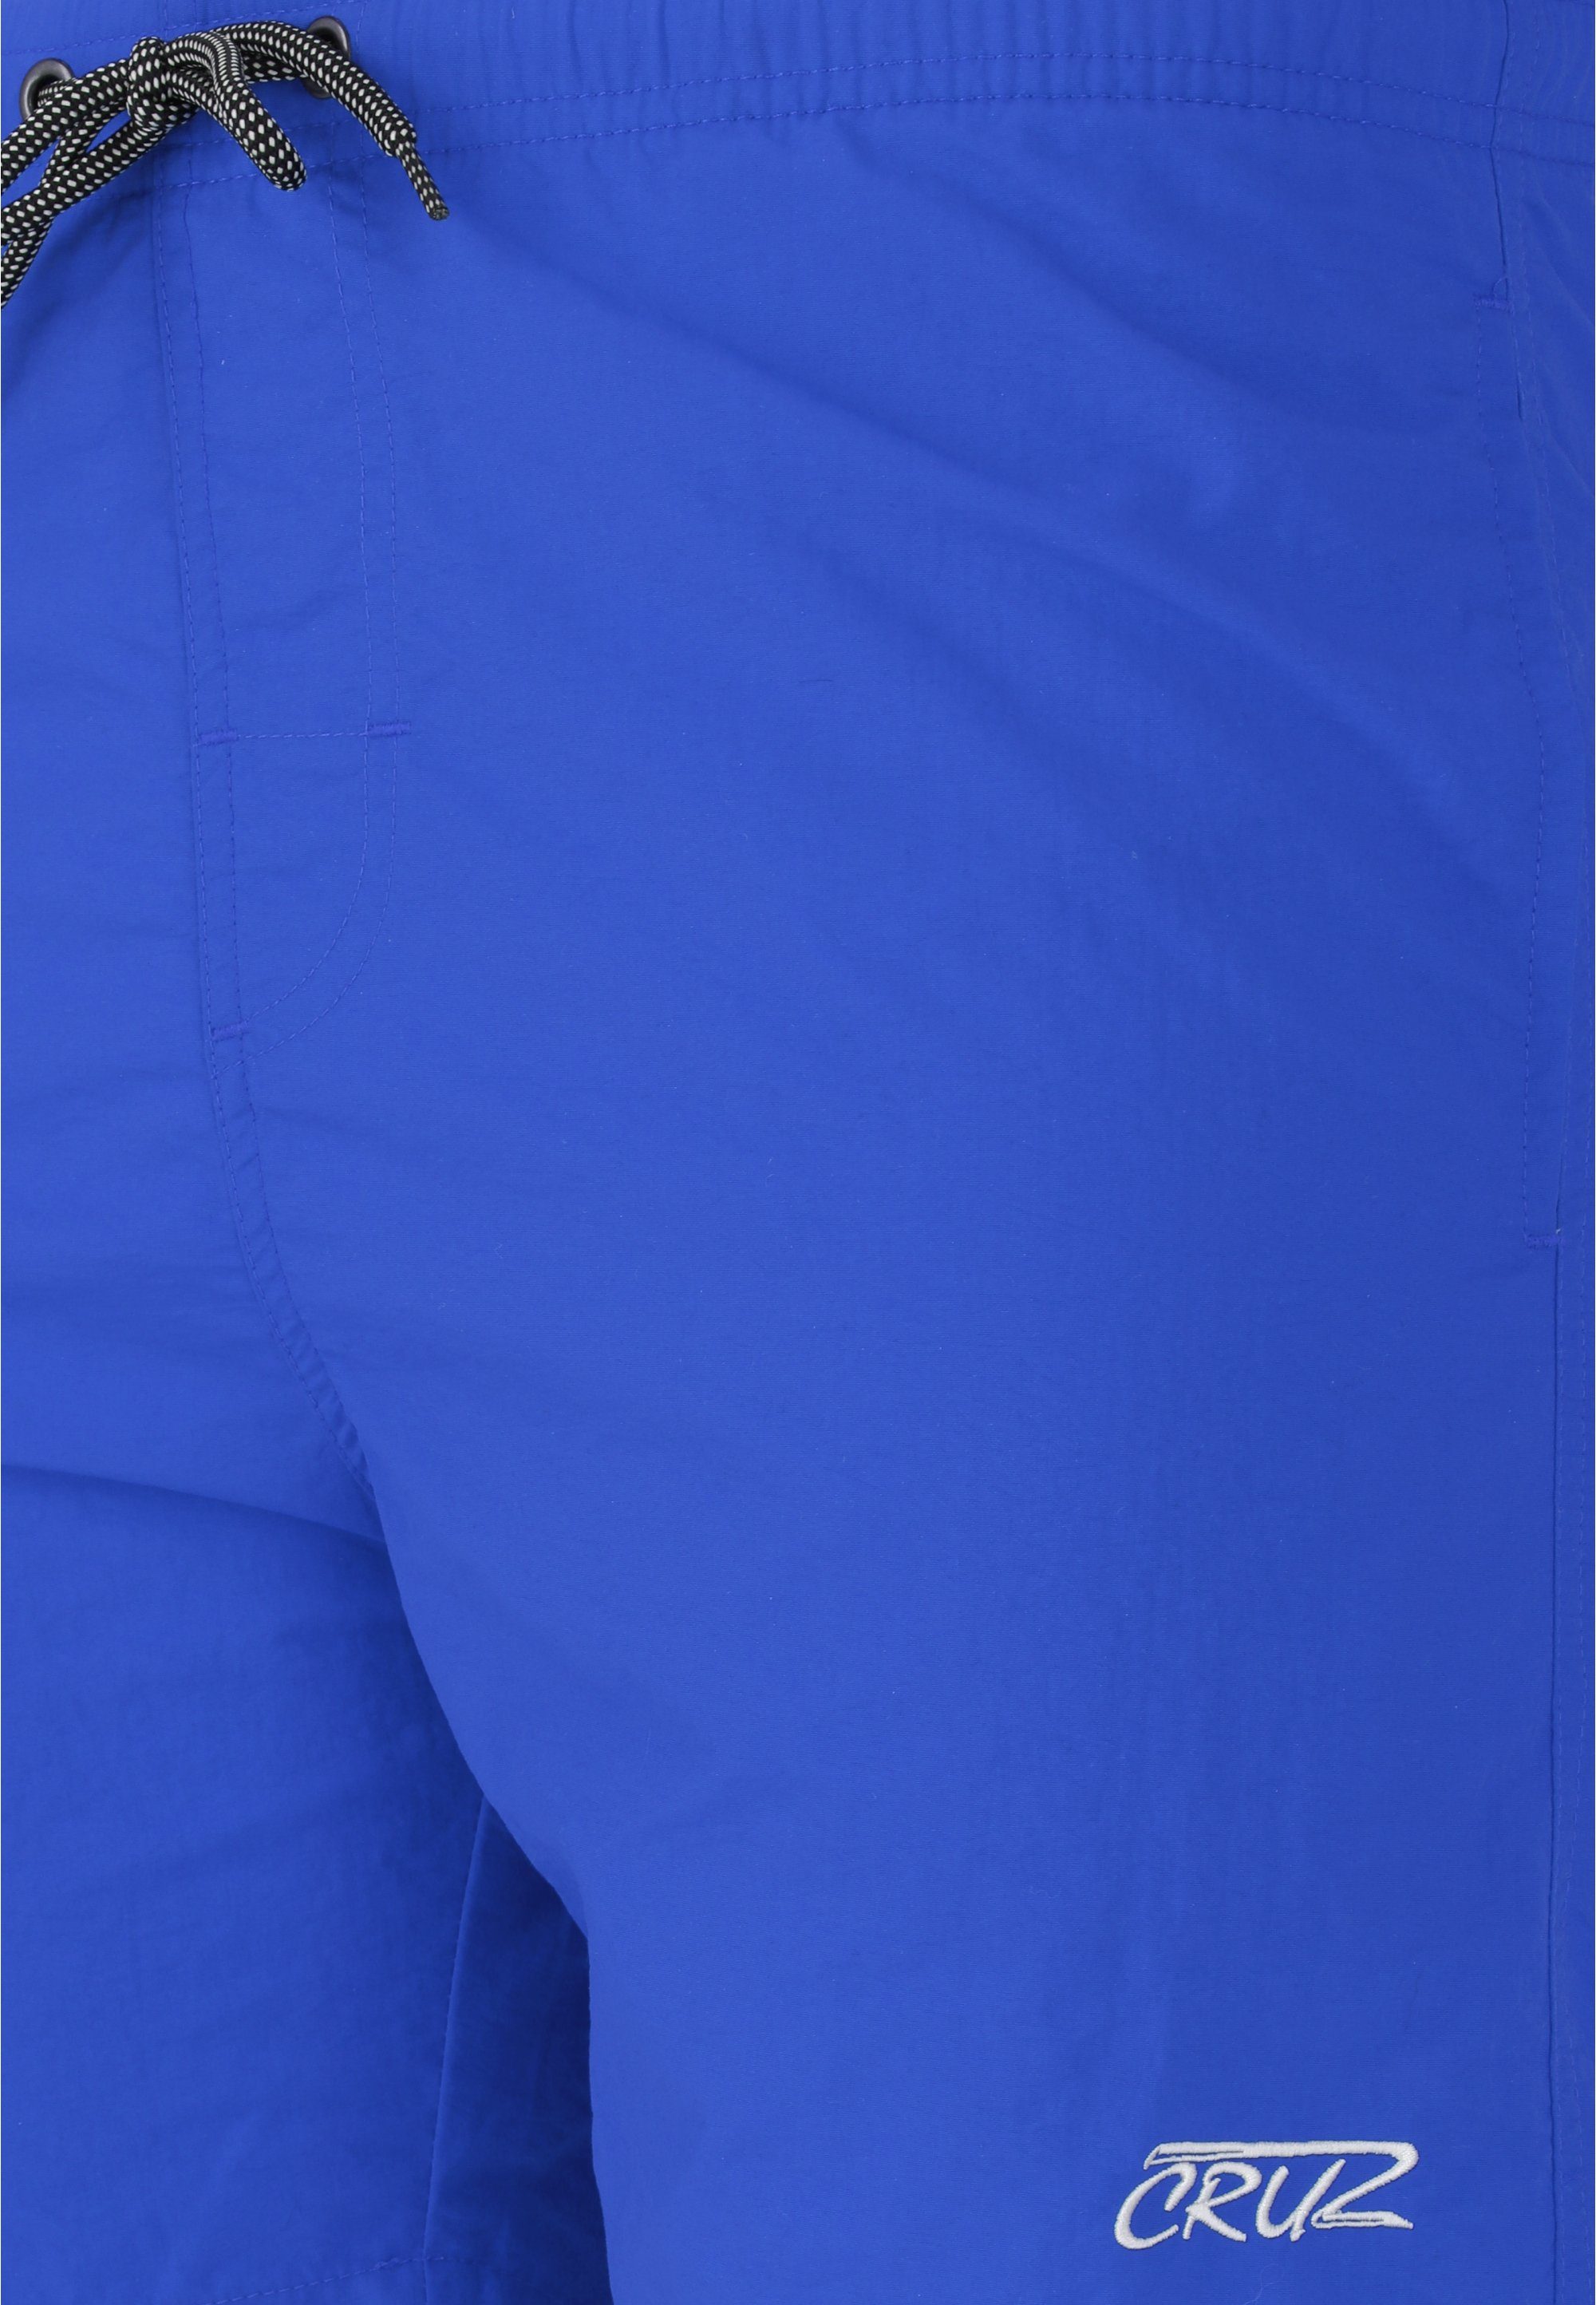 CRUZ Badehose in Clemont Design blau klassischem